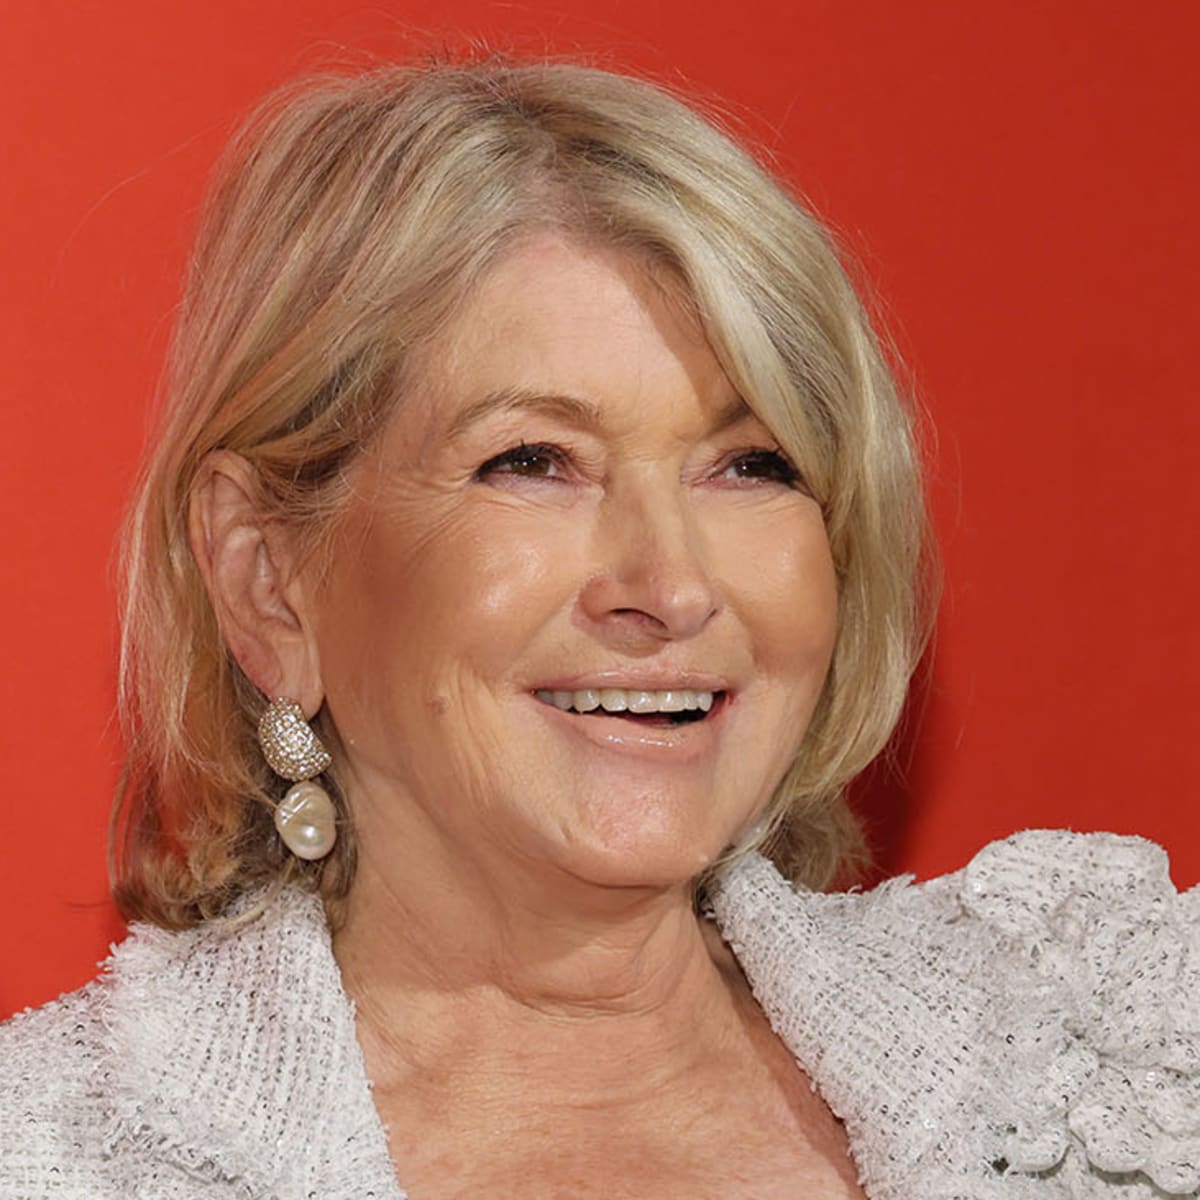 Martha Stewart, 82, slams 'age-appropriate' style rules: 'I've dressed the  same since I was 17